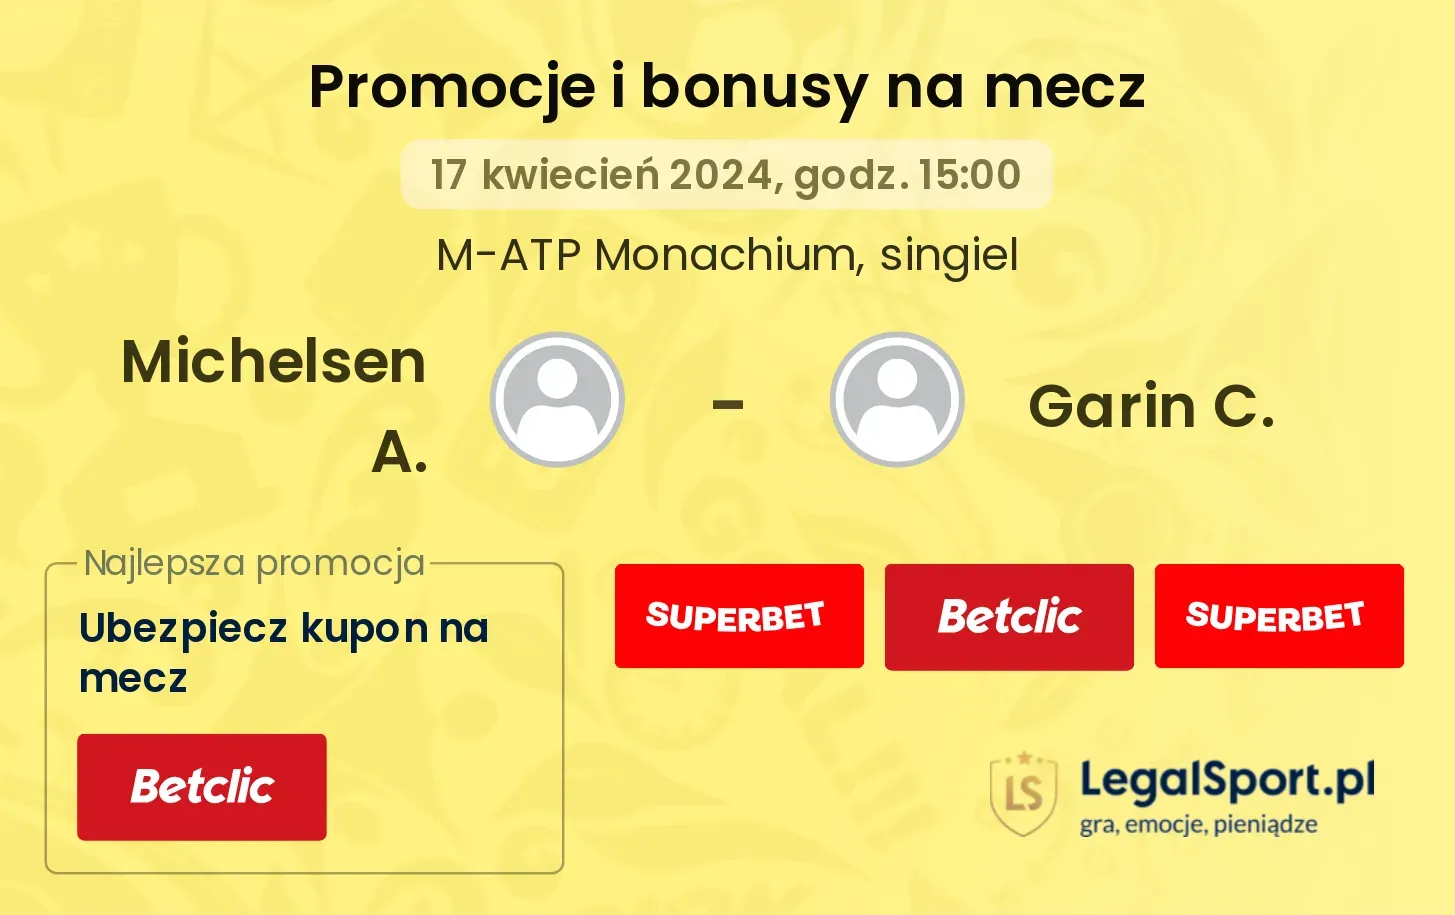 Michelsen A. - Garin C. promocje bonusy na mecz